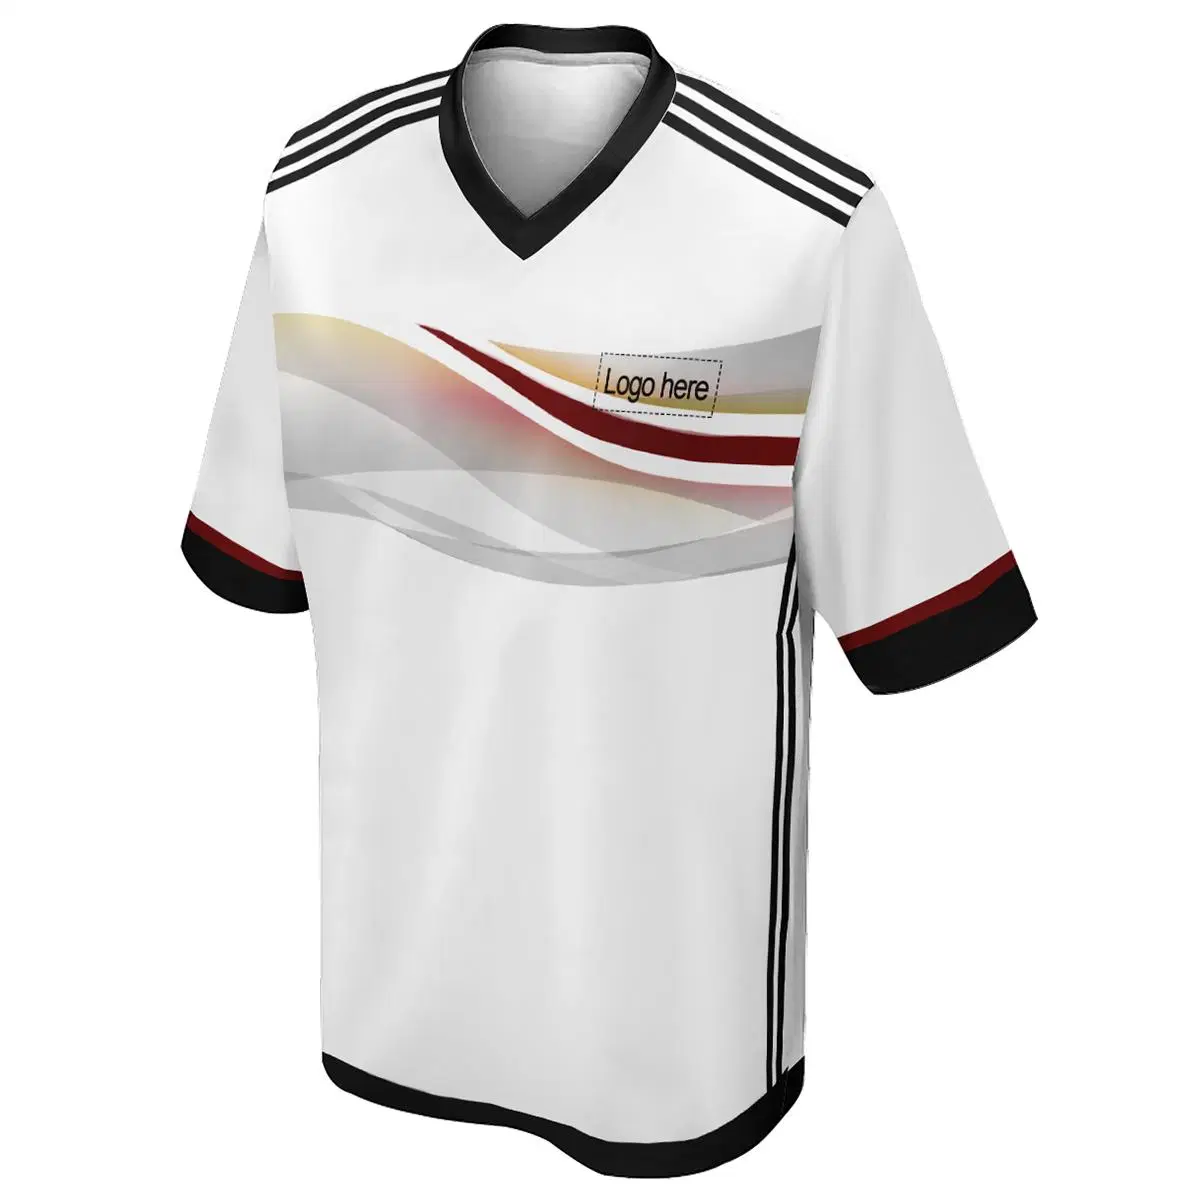 2022 Copa Mundial de Alemania Camiseta Camiseta de fútbol profesional de ropa deportiva camisetas de fútbol